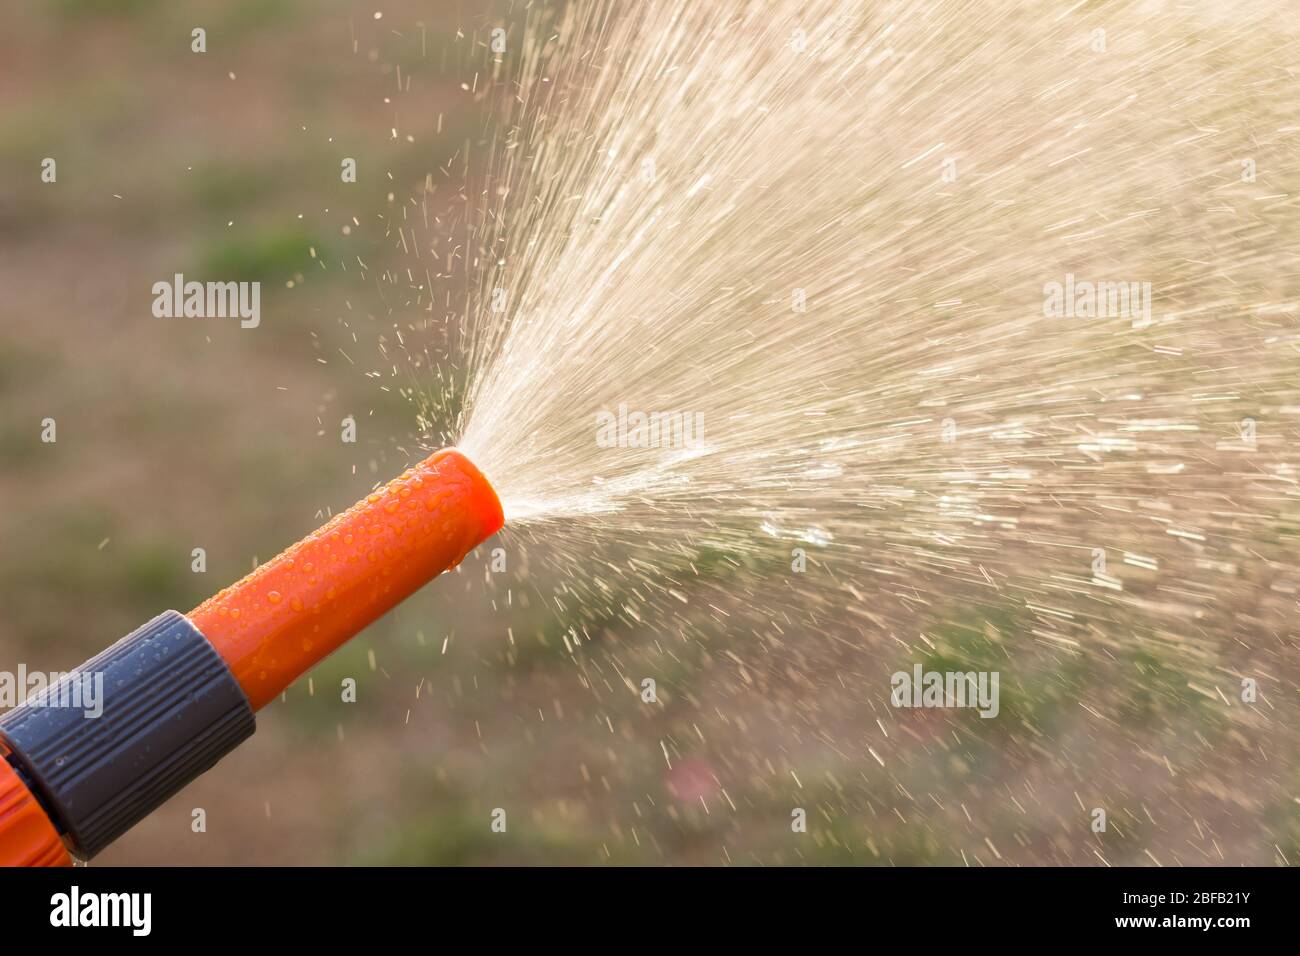 Water splash hose in garden Stock Photo